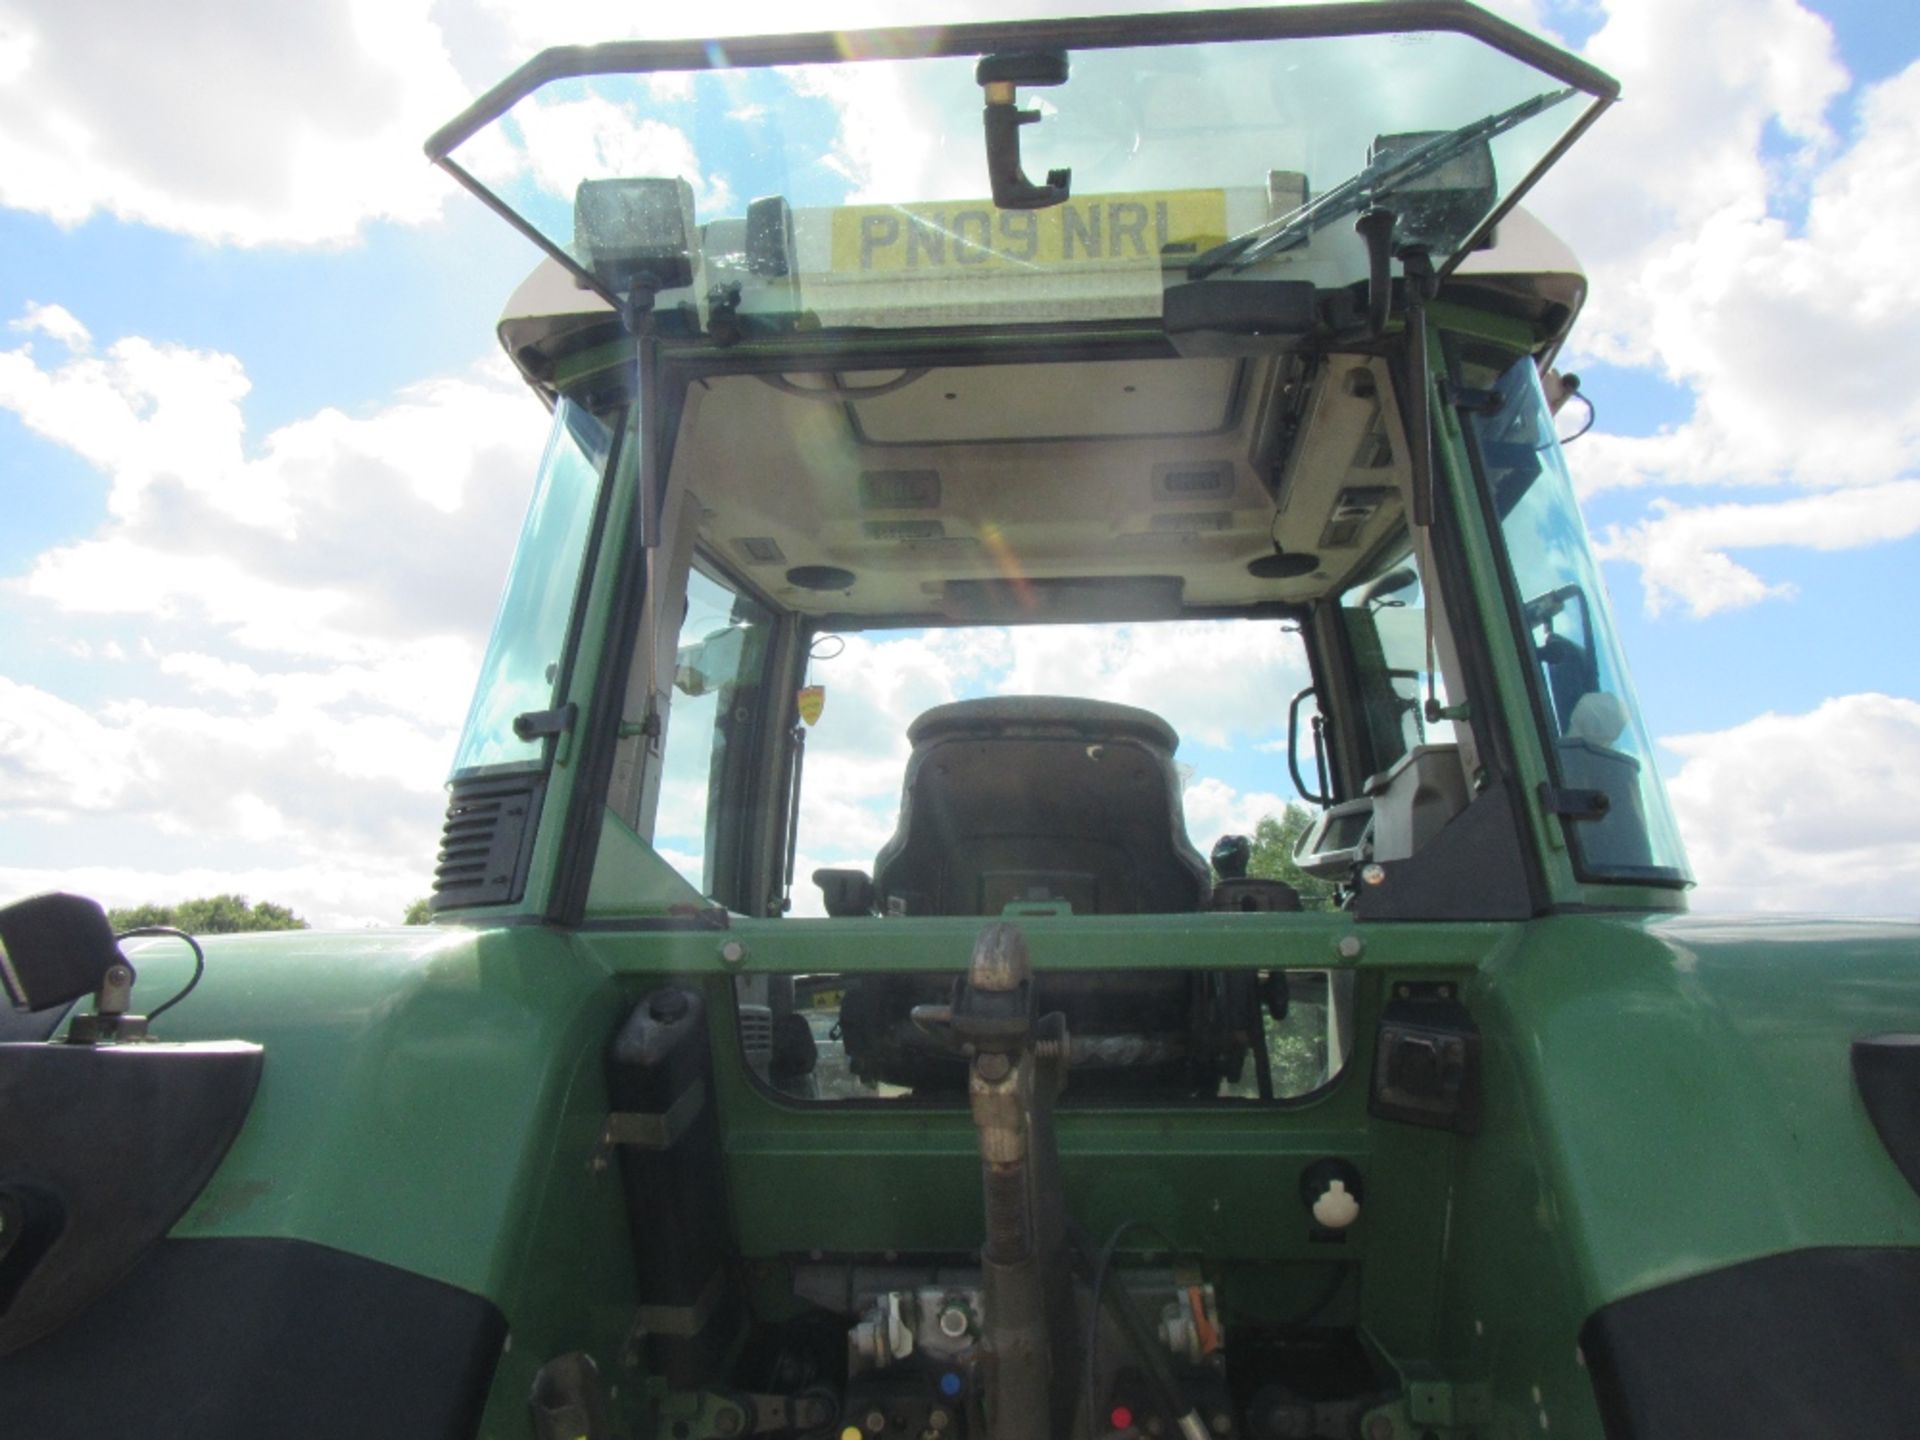 2009 Fendt 820 Tractor with Links & PTO. No V5 7000 Hrs Reg No PN09 NRL Ser No 731216450 - Image 9 of 19